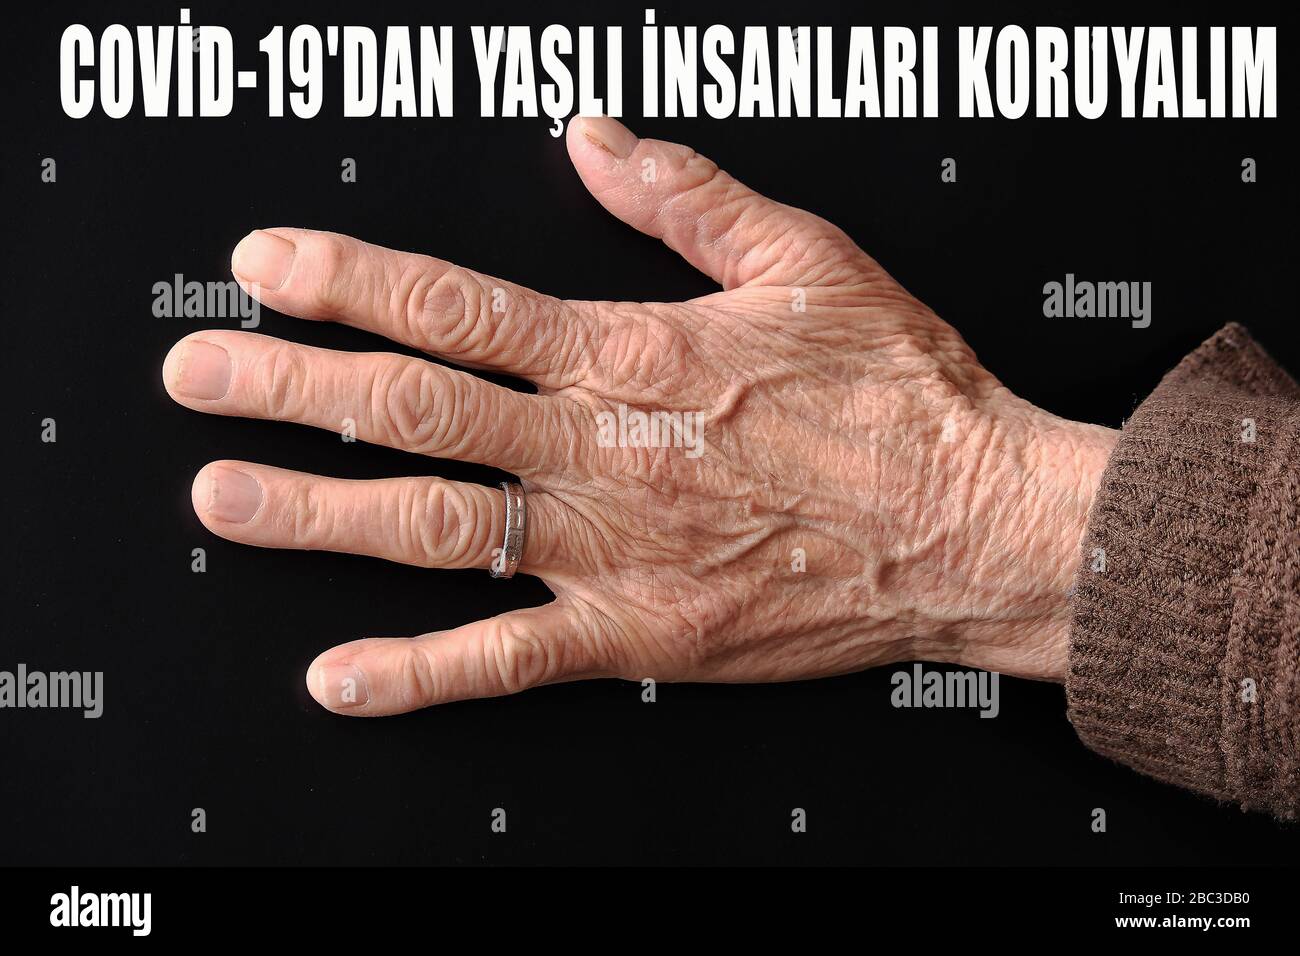 covid-19 virus and the elderly, Turkish warning studies on elderly, Stock Photo